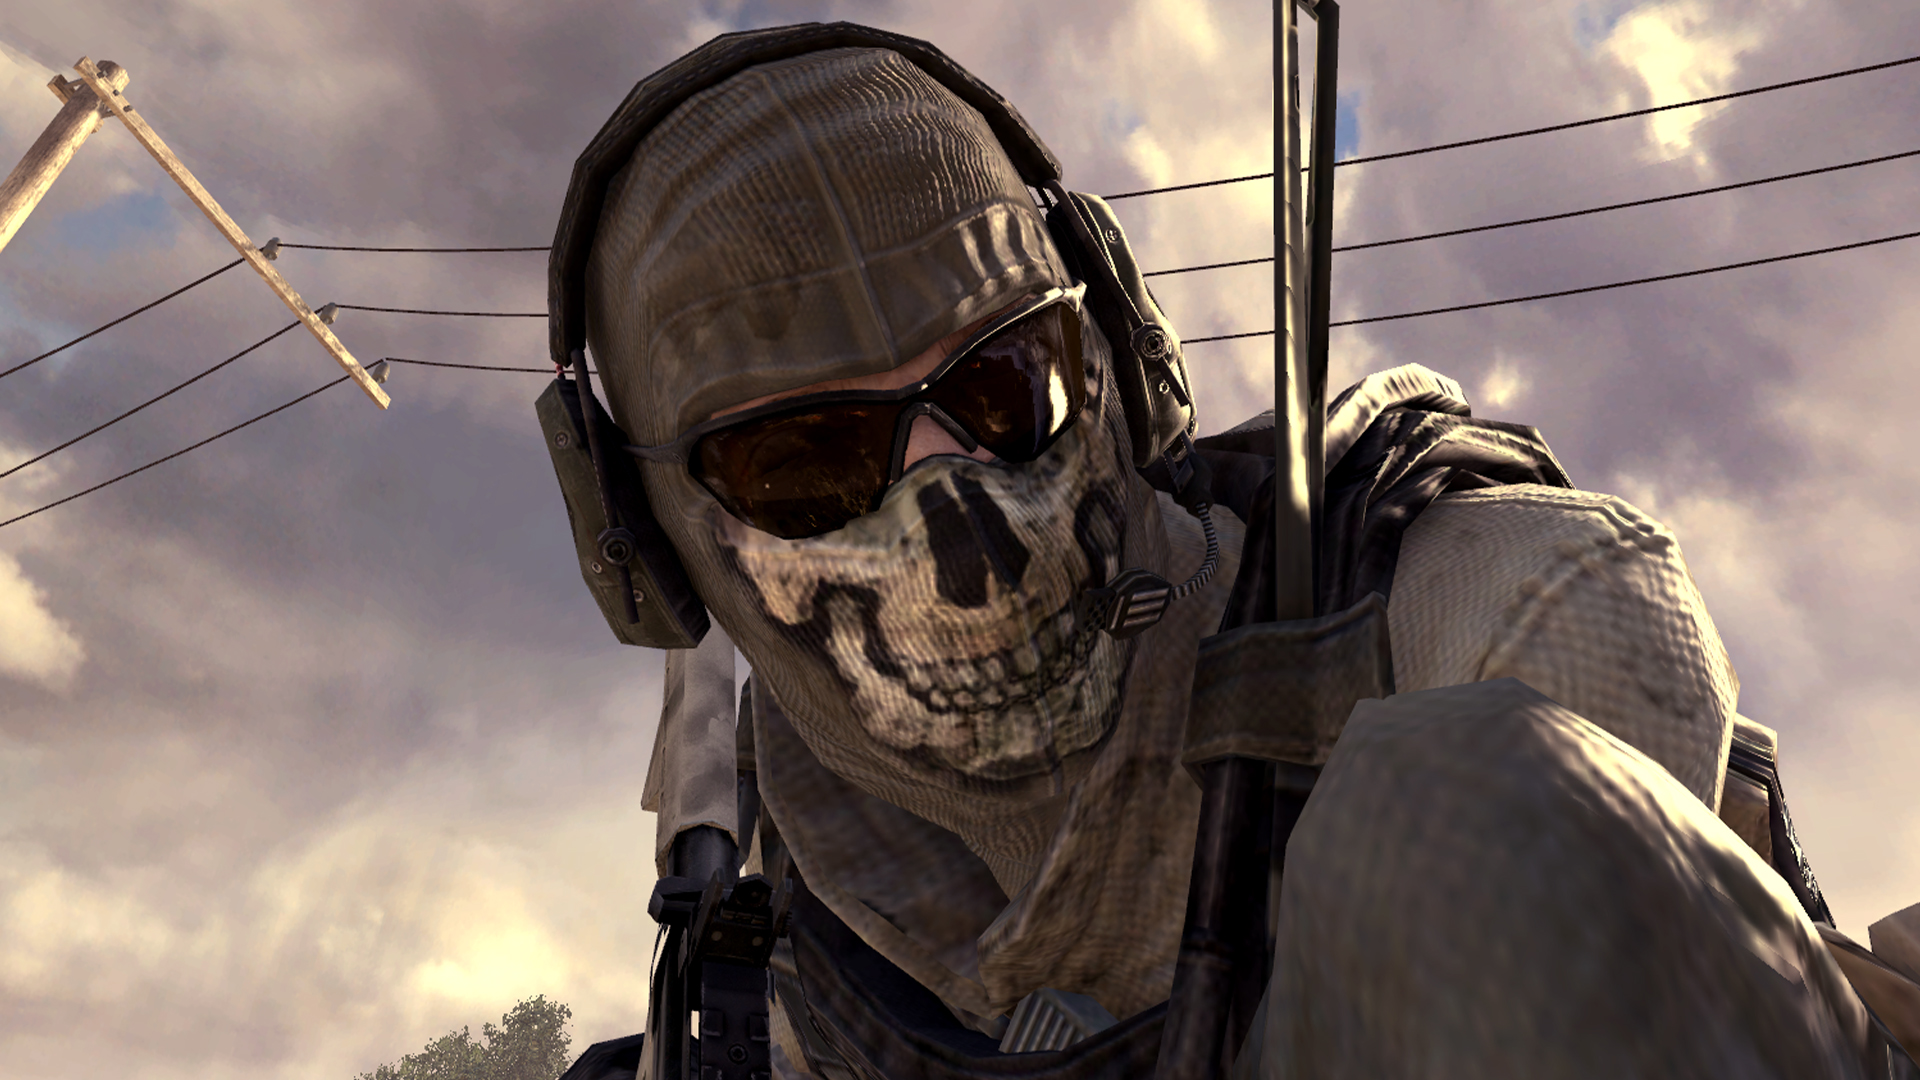 “Ghost confirmed” for Call of Duty Modern Warfare season 2